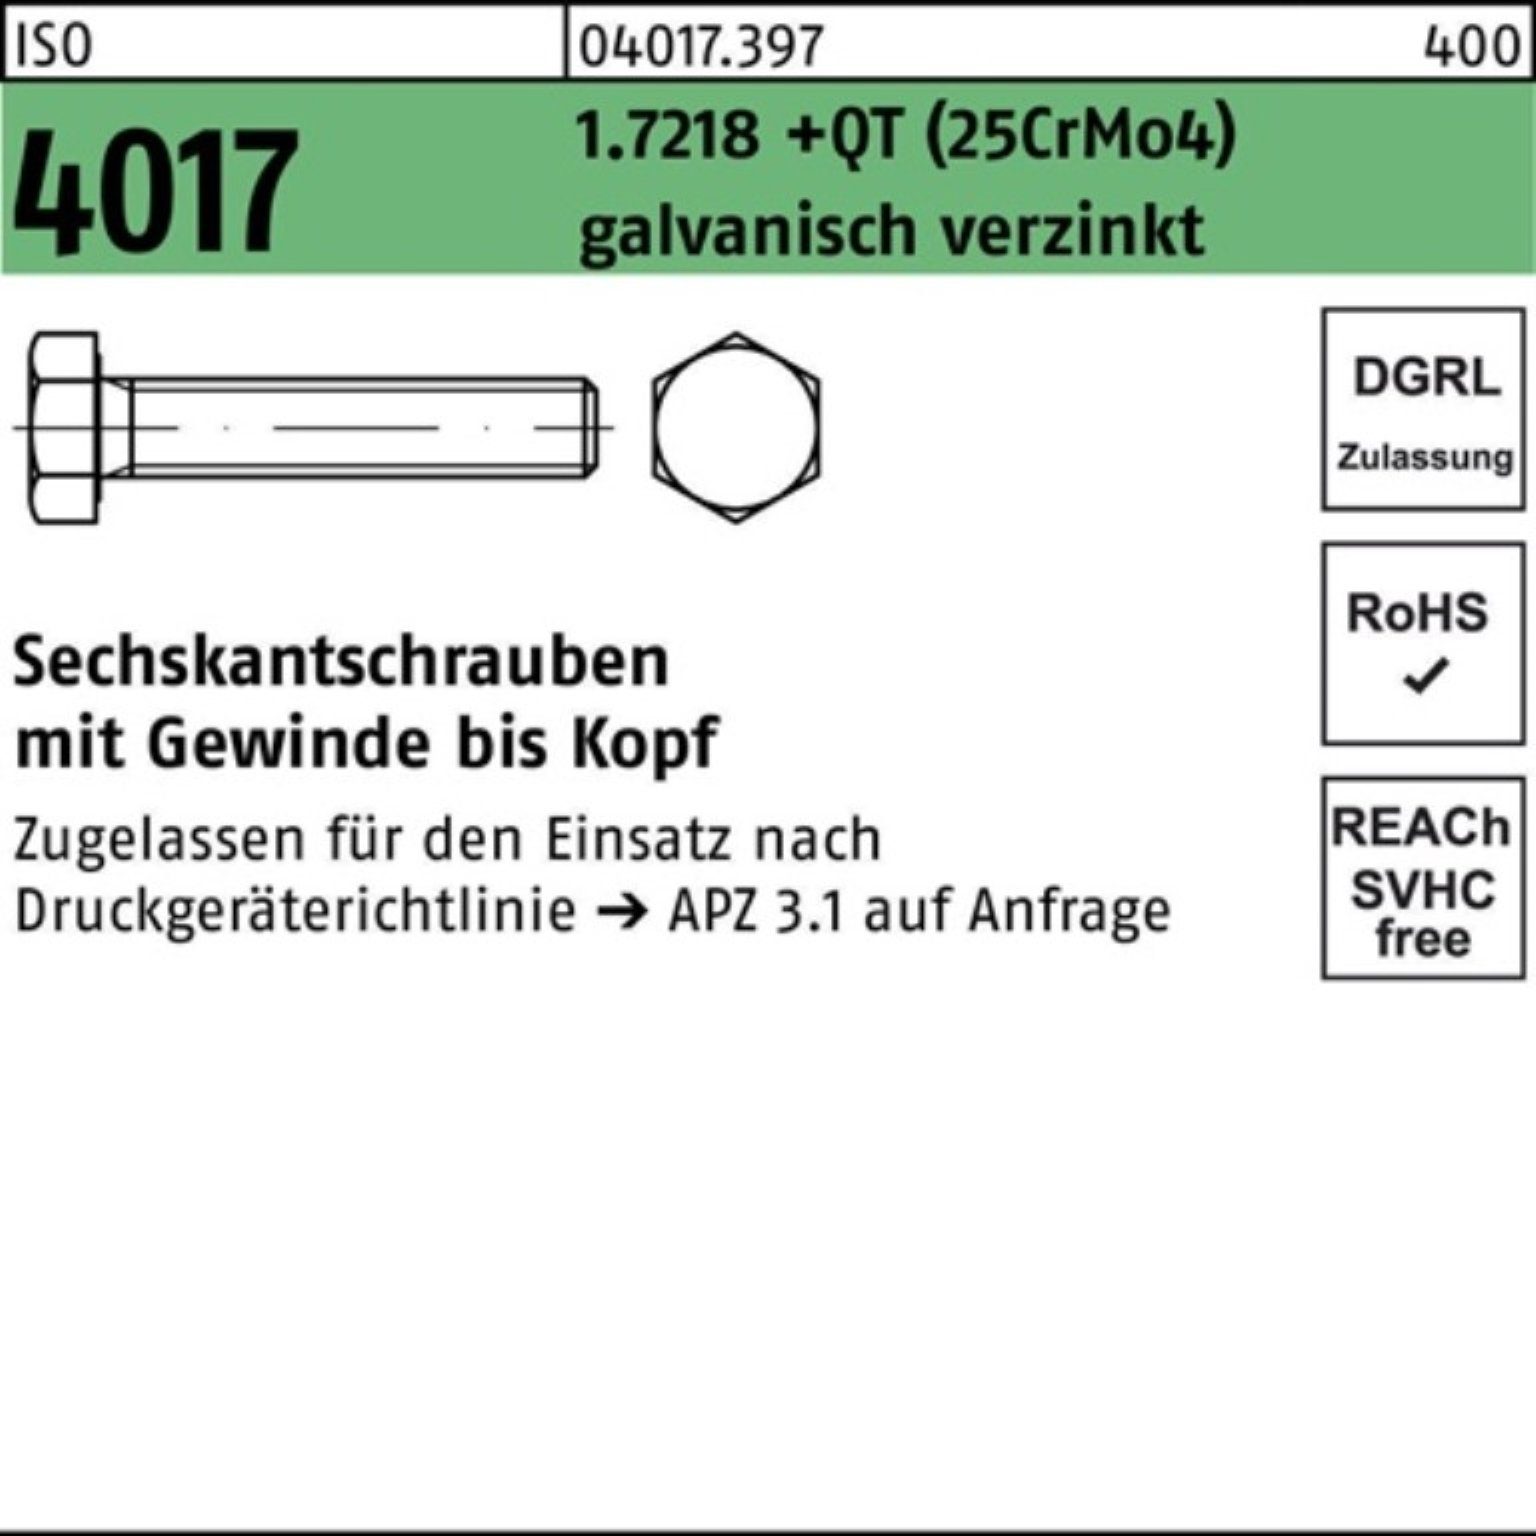 g VG 1.7218 ISO Sechskantschraube (25CrMo4) +QT Bufab Pack Sechskantschraube M24x40 100er 4017